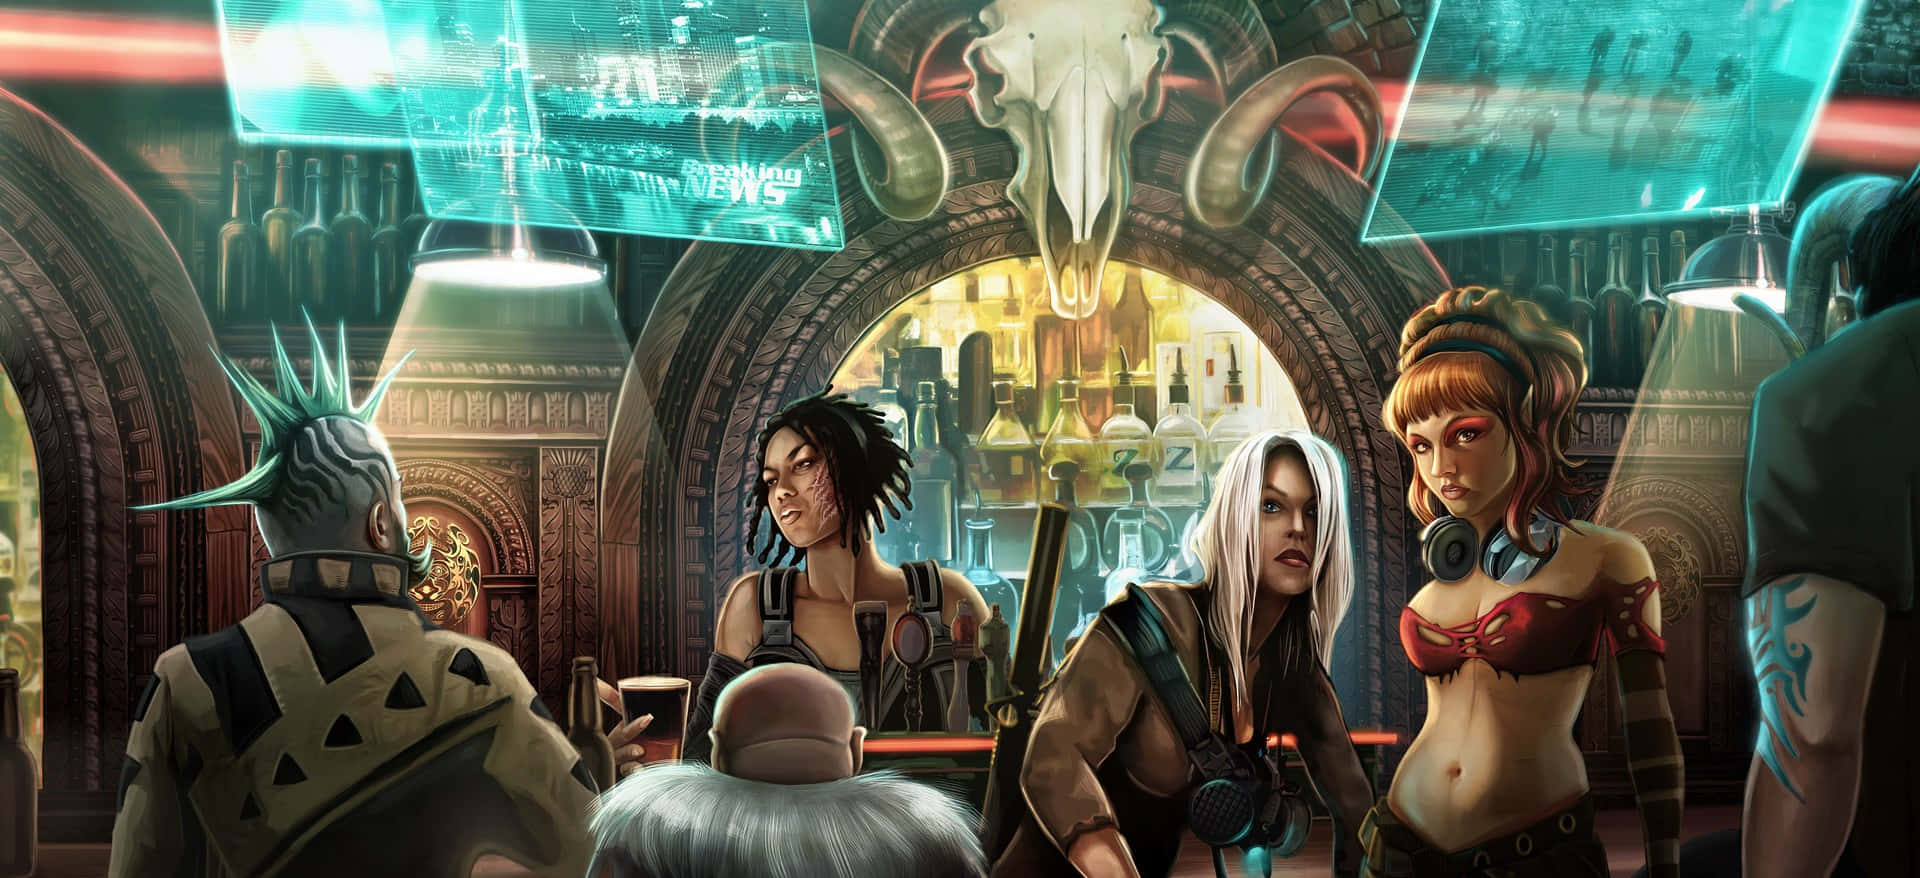 Dyk ned i verdenen af Shadowrun med Cyberpunk. Wallpaper